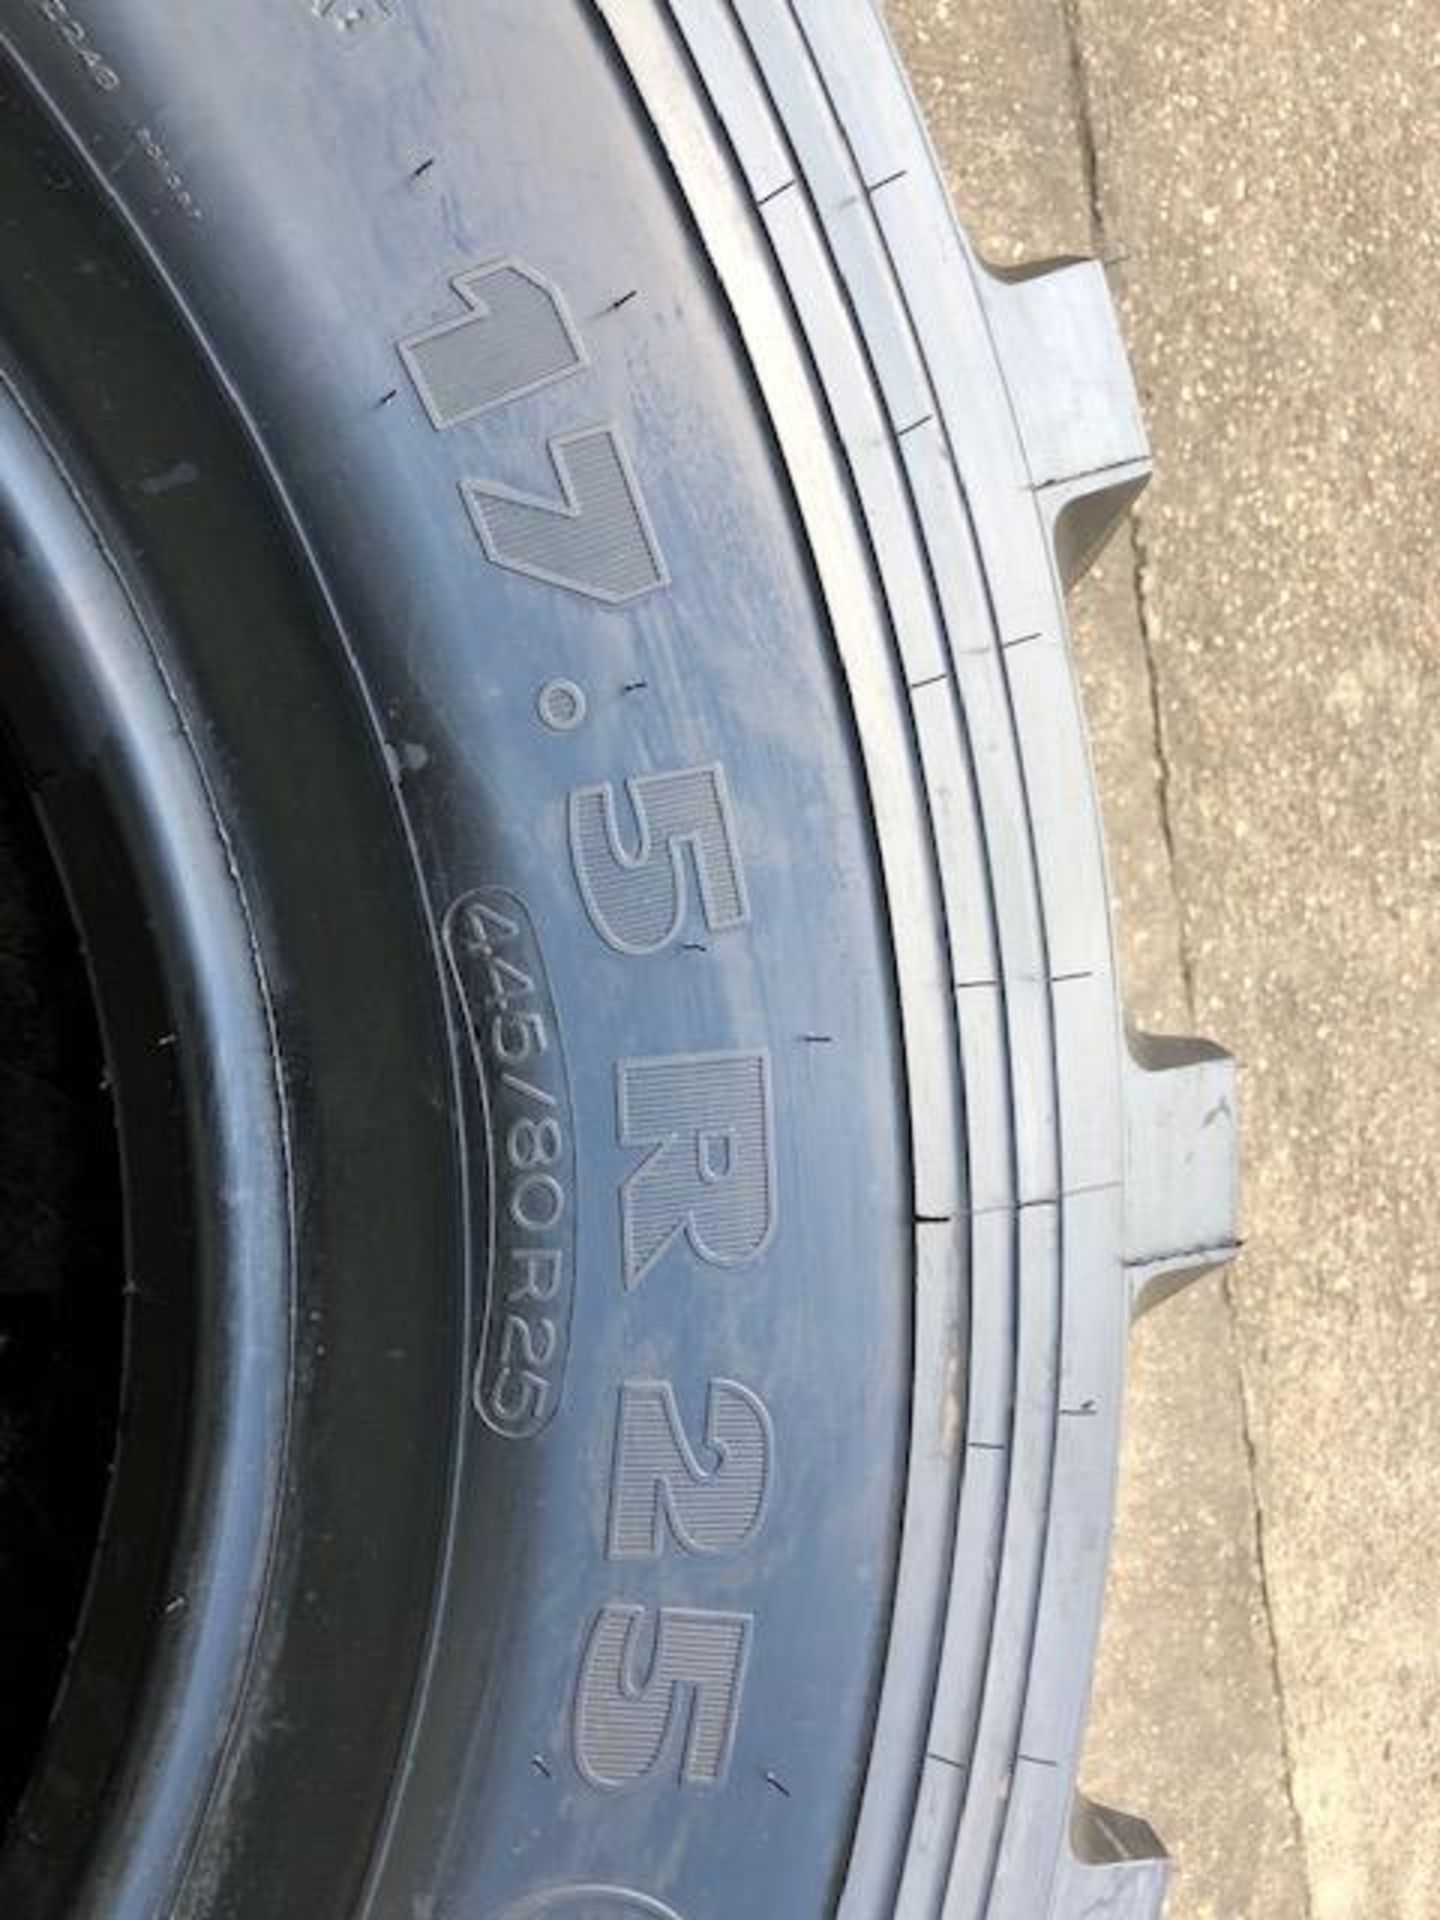 17.5 R (445 / 80 R 25) Michelin XLB Tyre unused. - Image 4 of 8